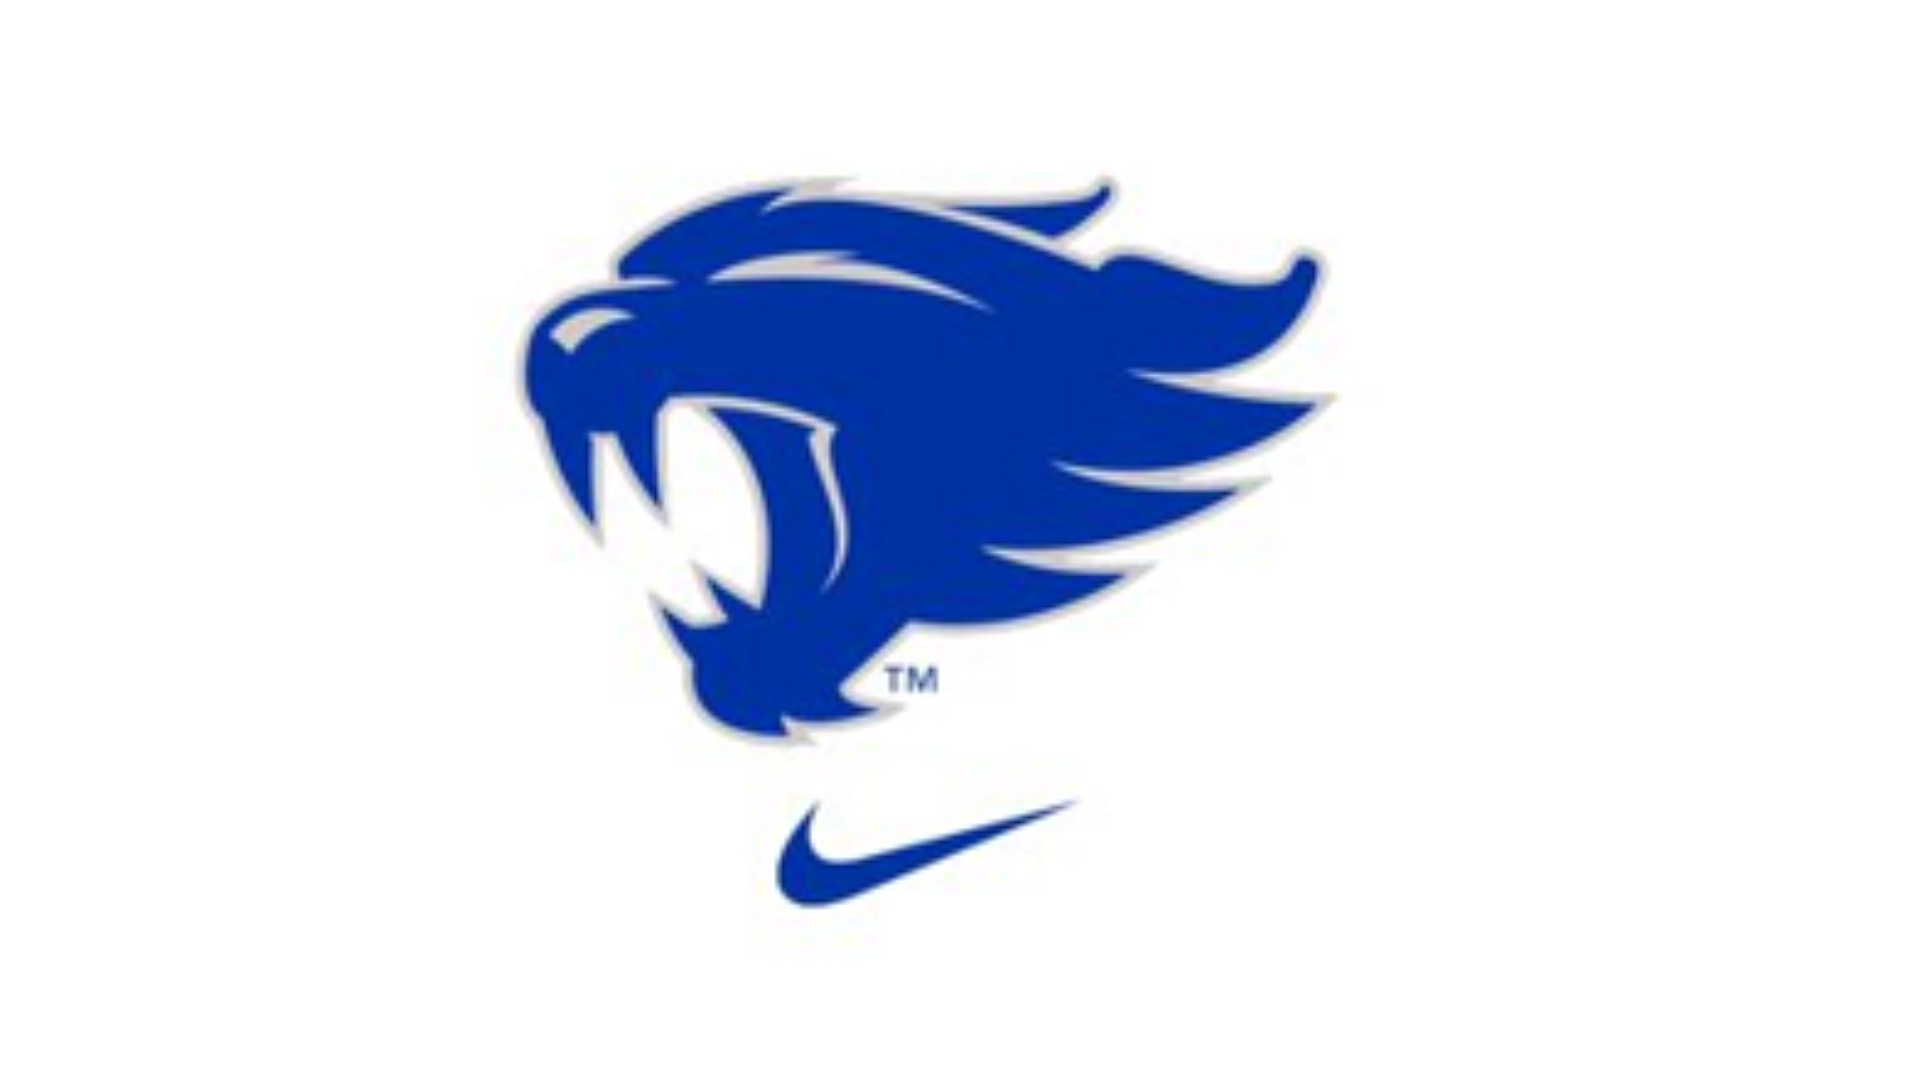 Kentucky makes waves with new Wildcat logo | NCAA Basketball ...